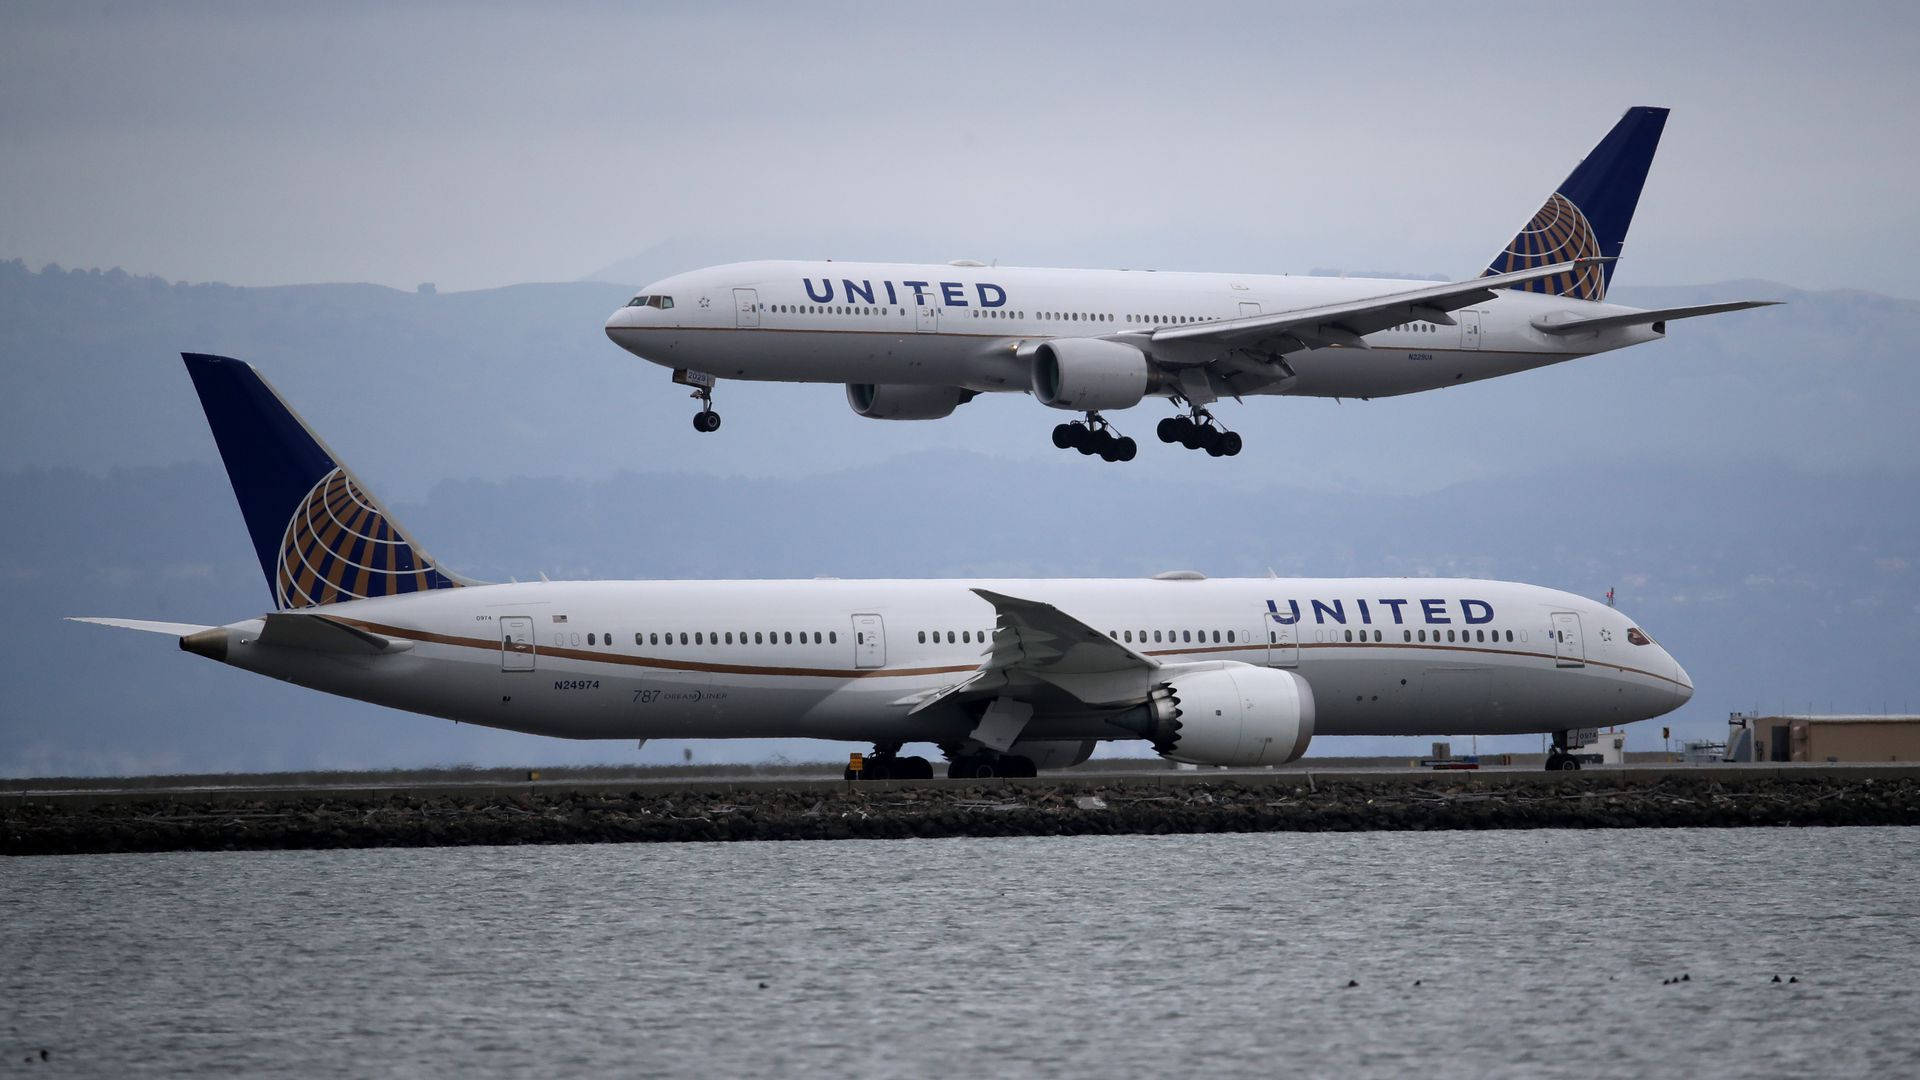 United Airlines Fleet on the Runway Wallpaper